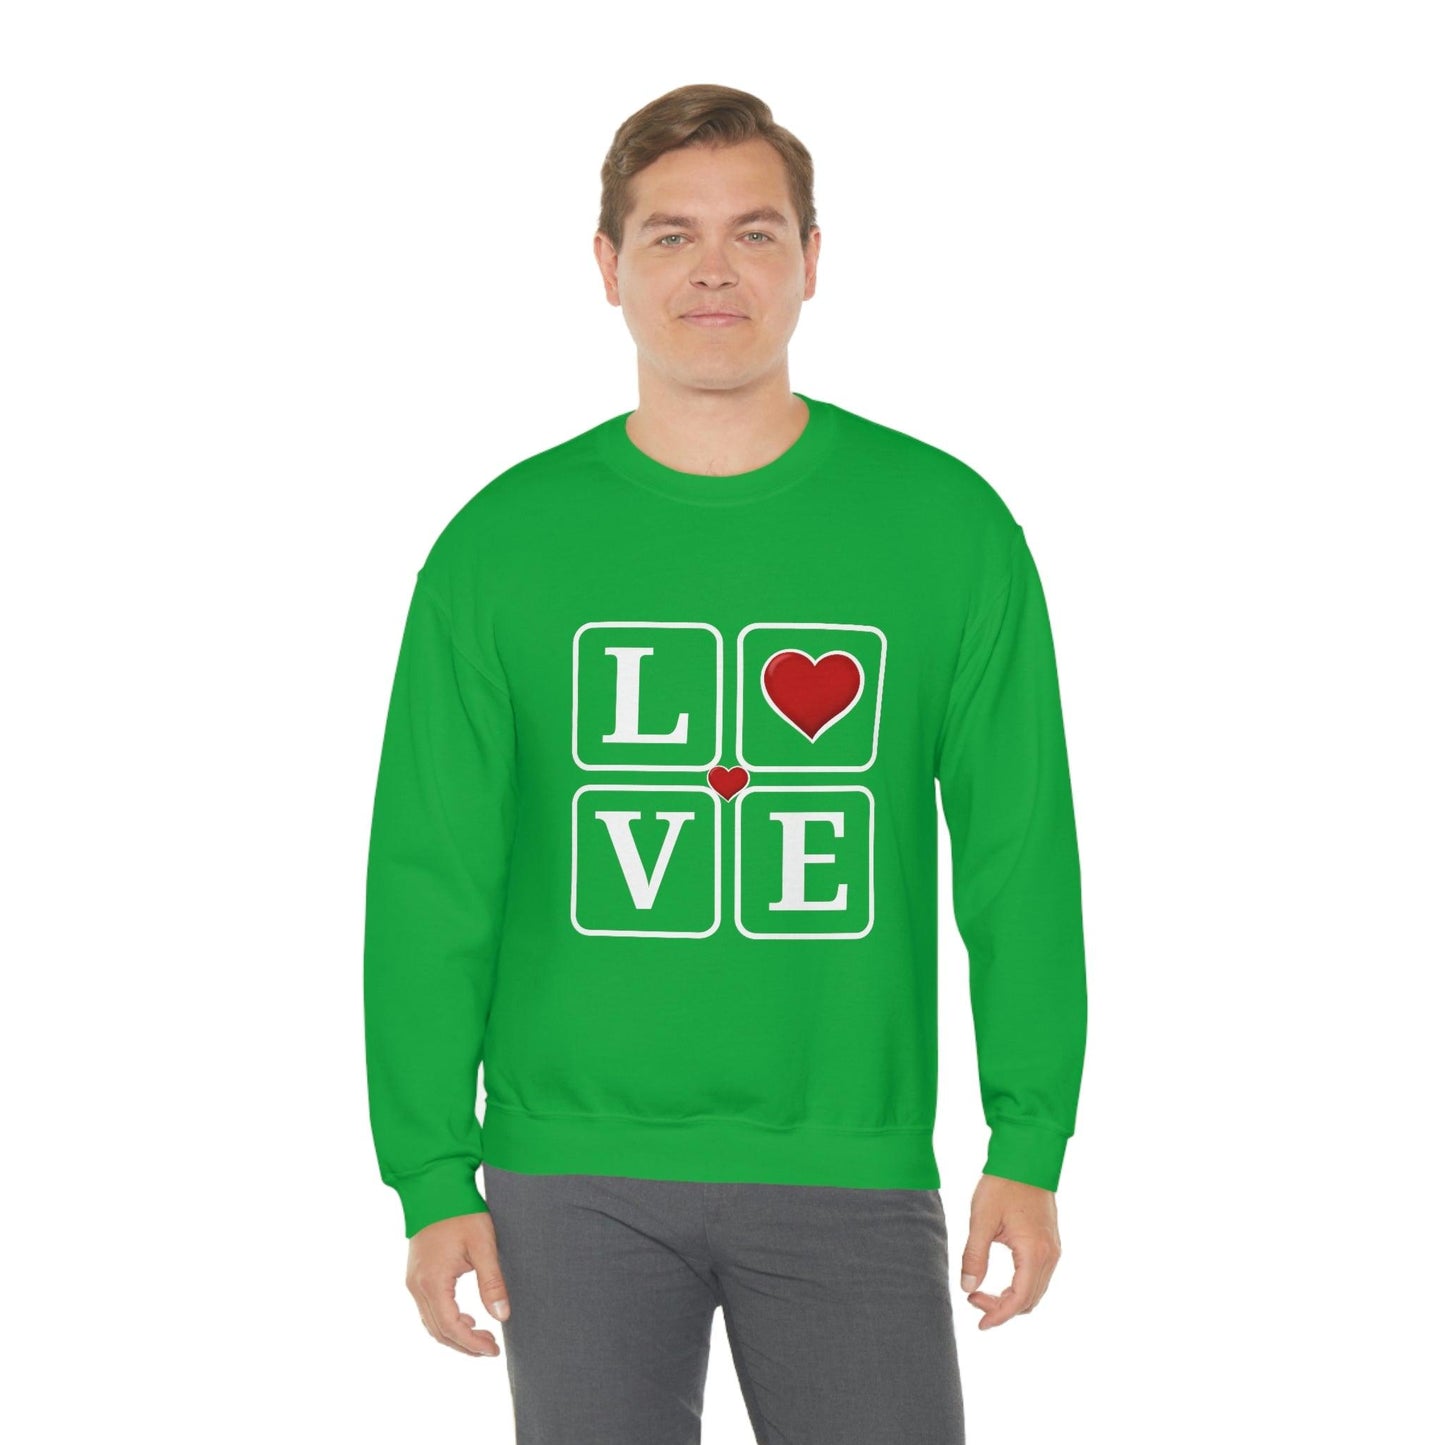 Love square Hearts Sweatshirt